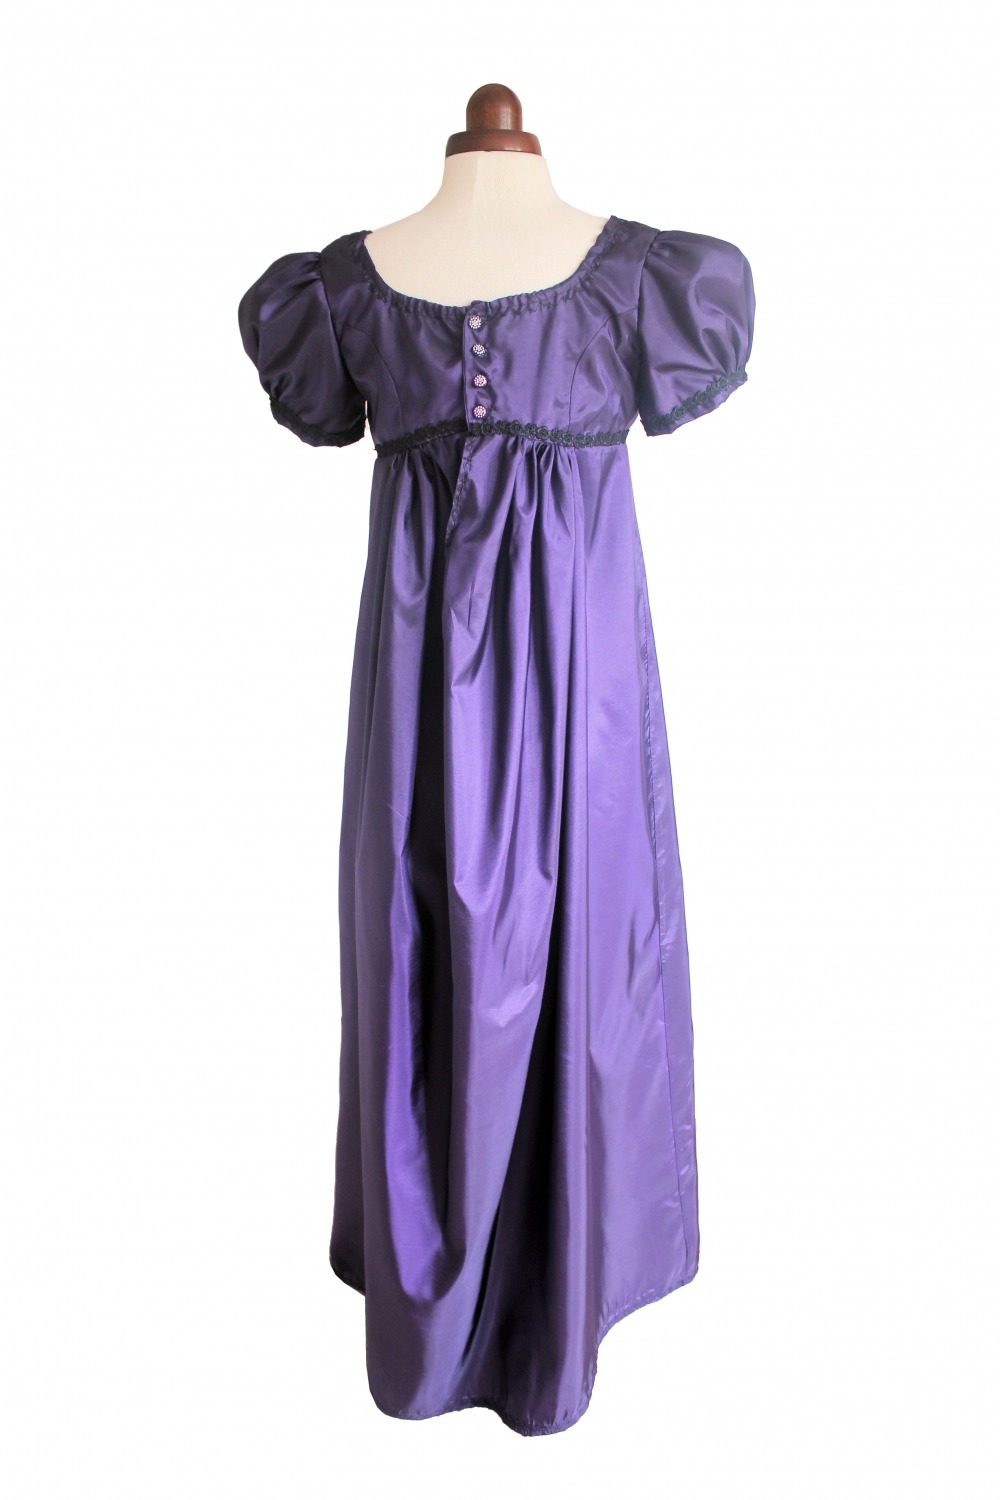 Ladies 19th Century Jane Austen Regency Evening Ball Gown Size 10 - 12 Image